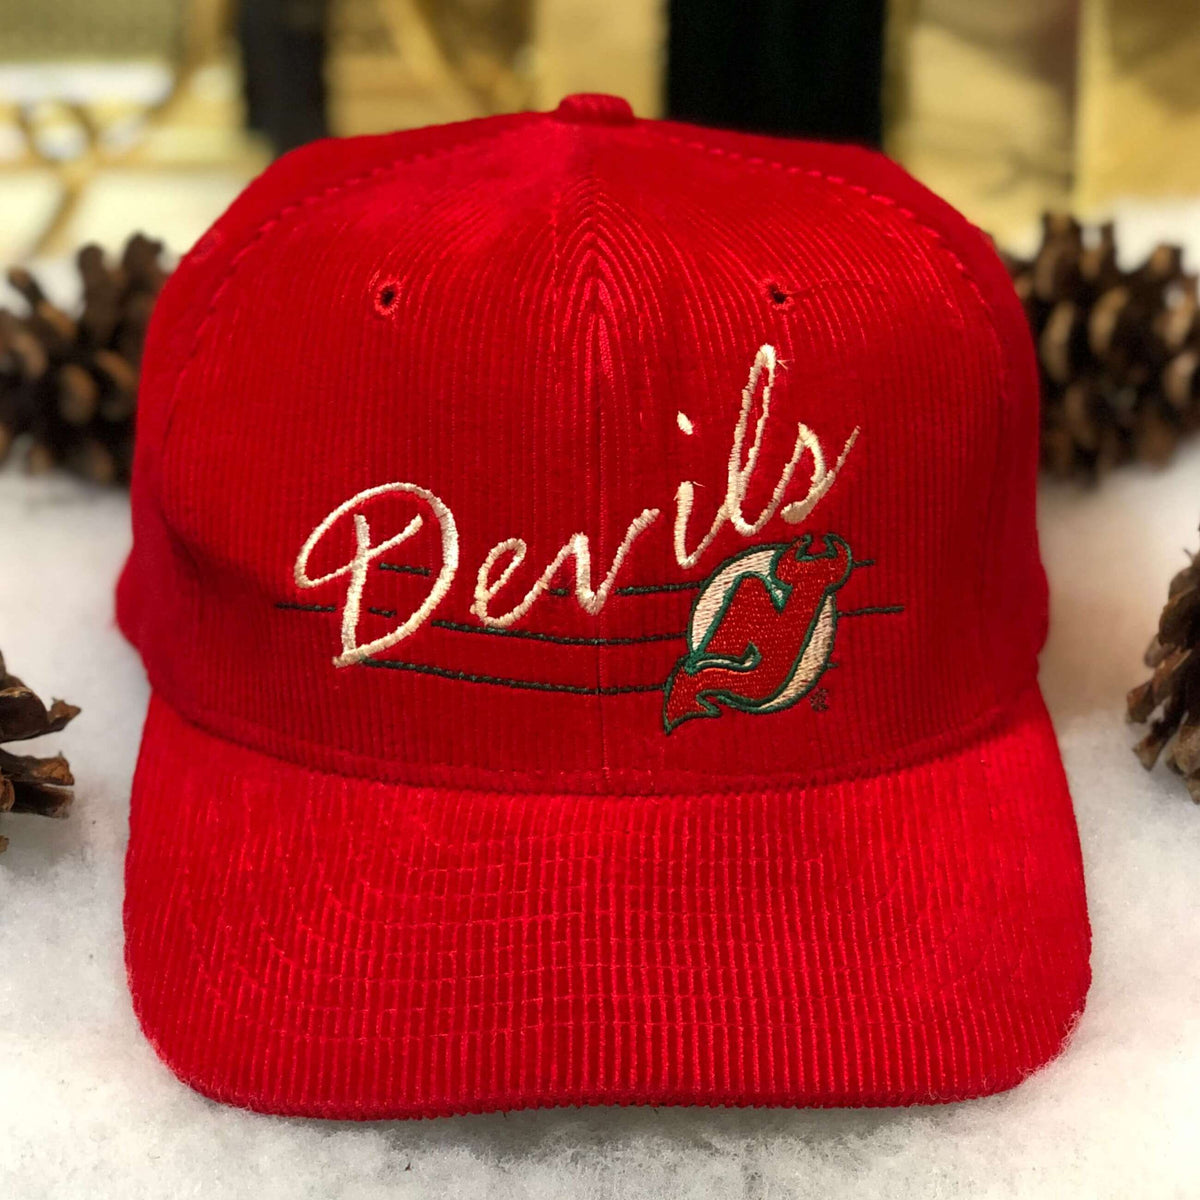 New Jersey Devils Hats